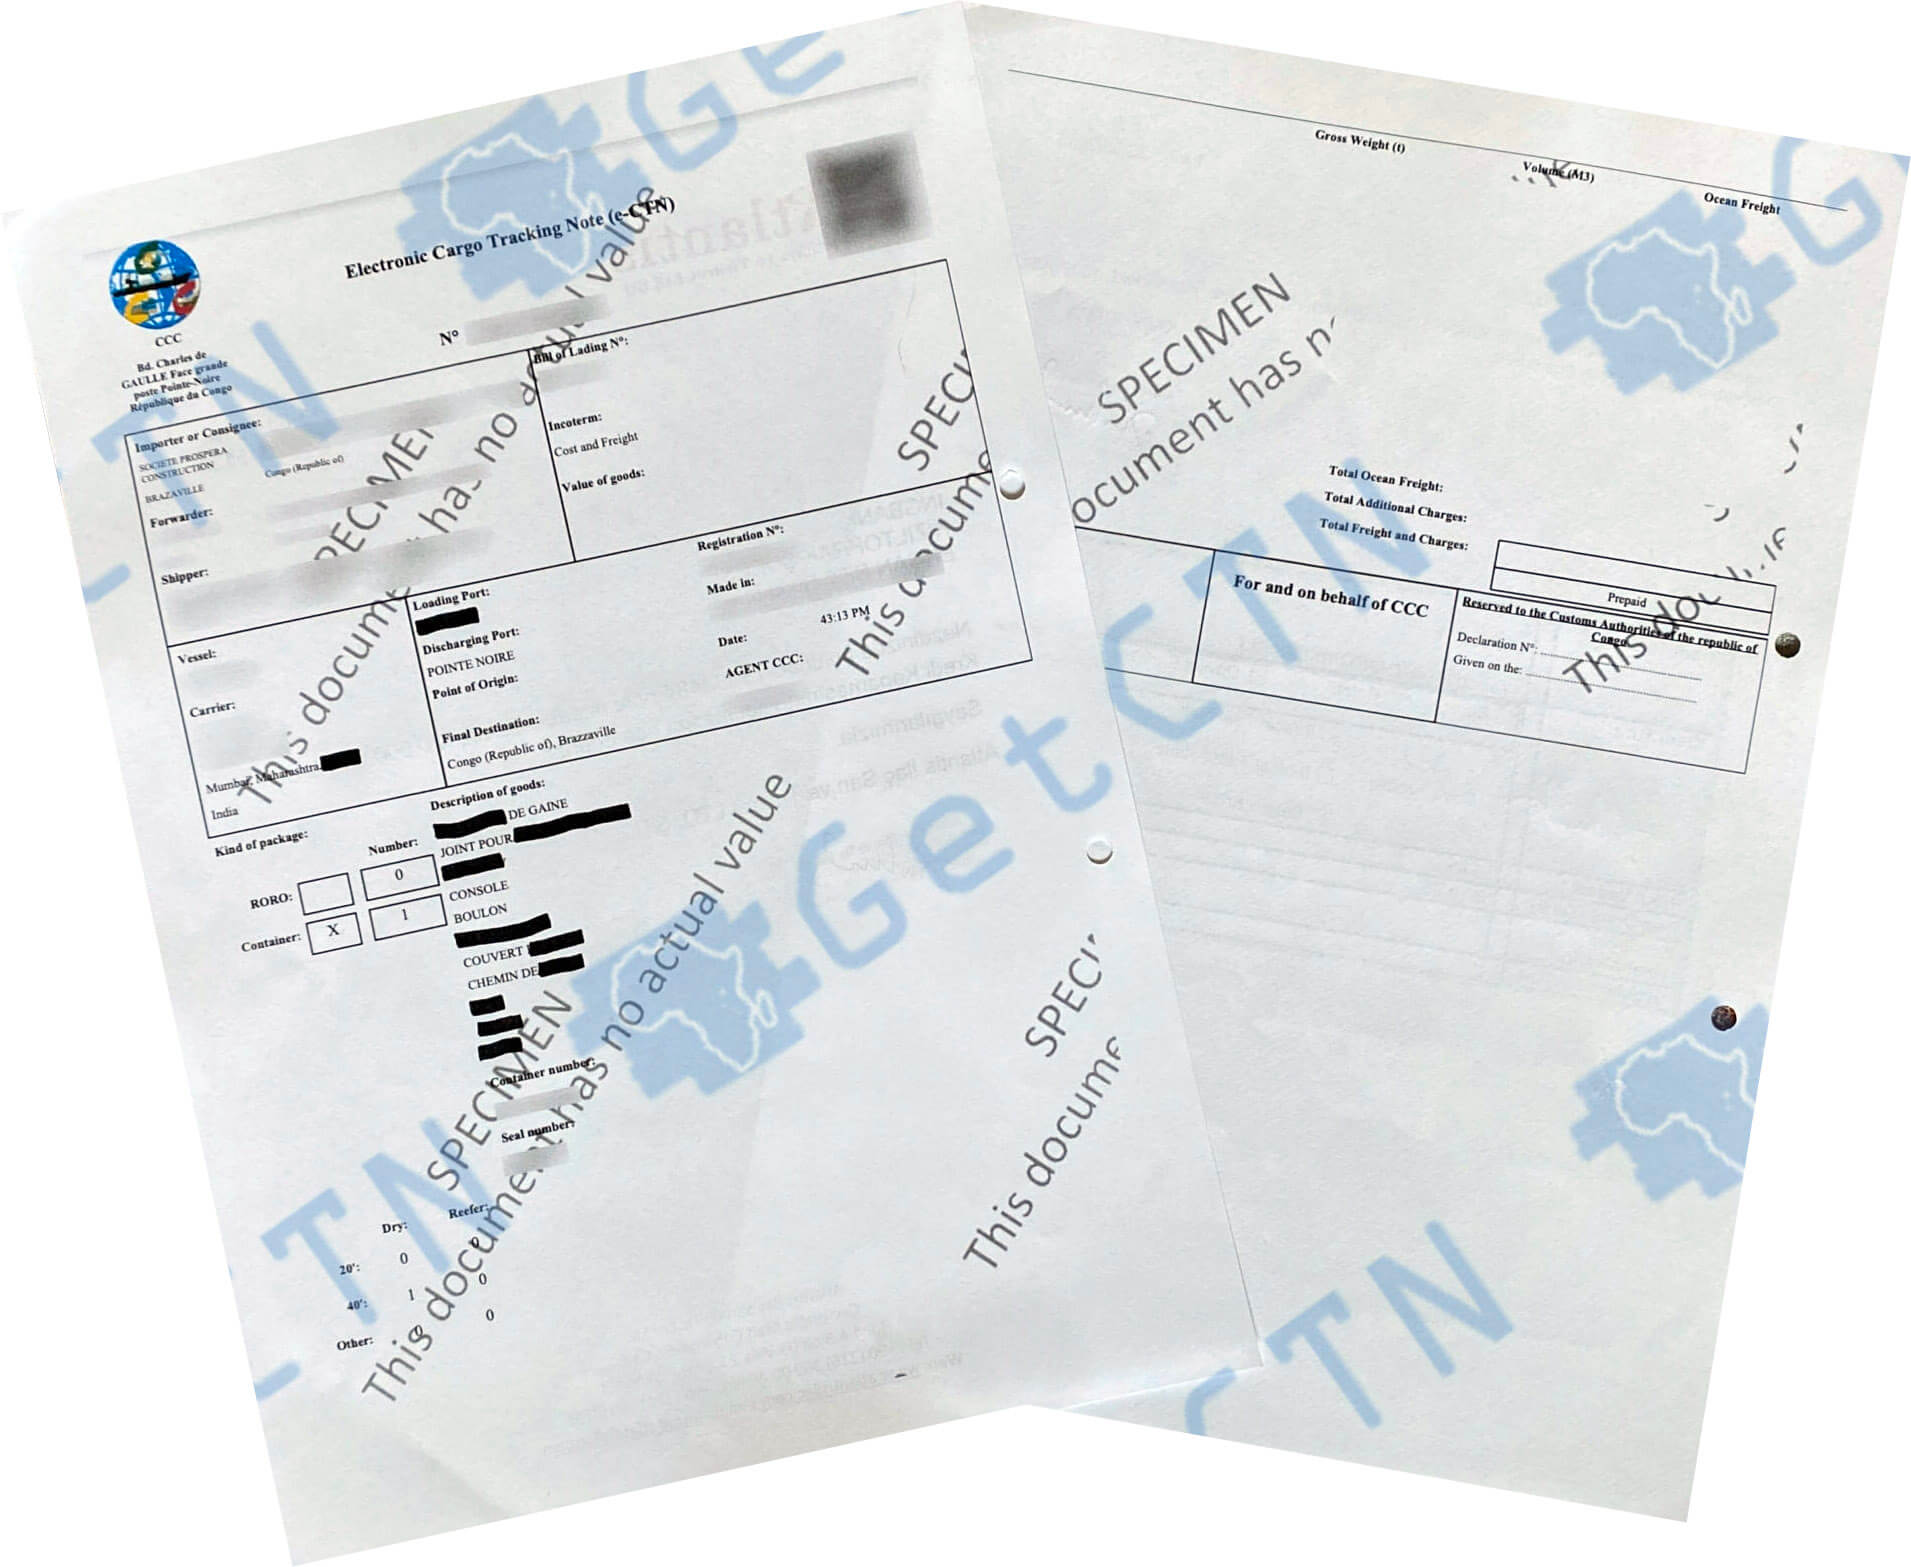 A Sample Republic of Congo ECTN Certificate